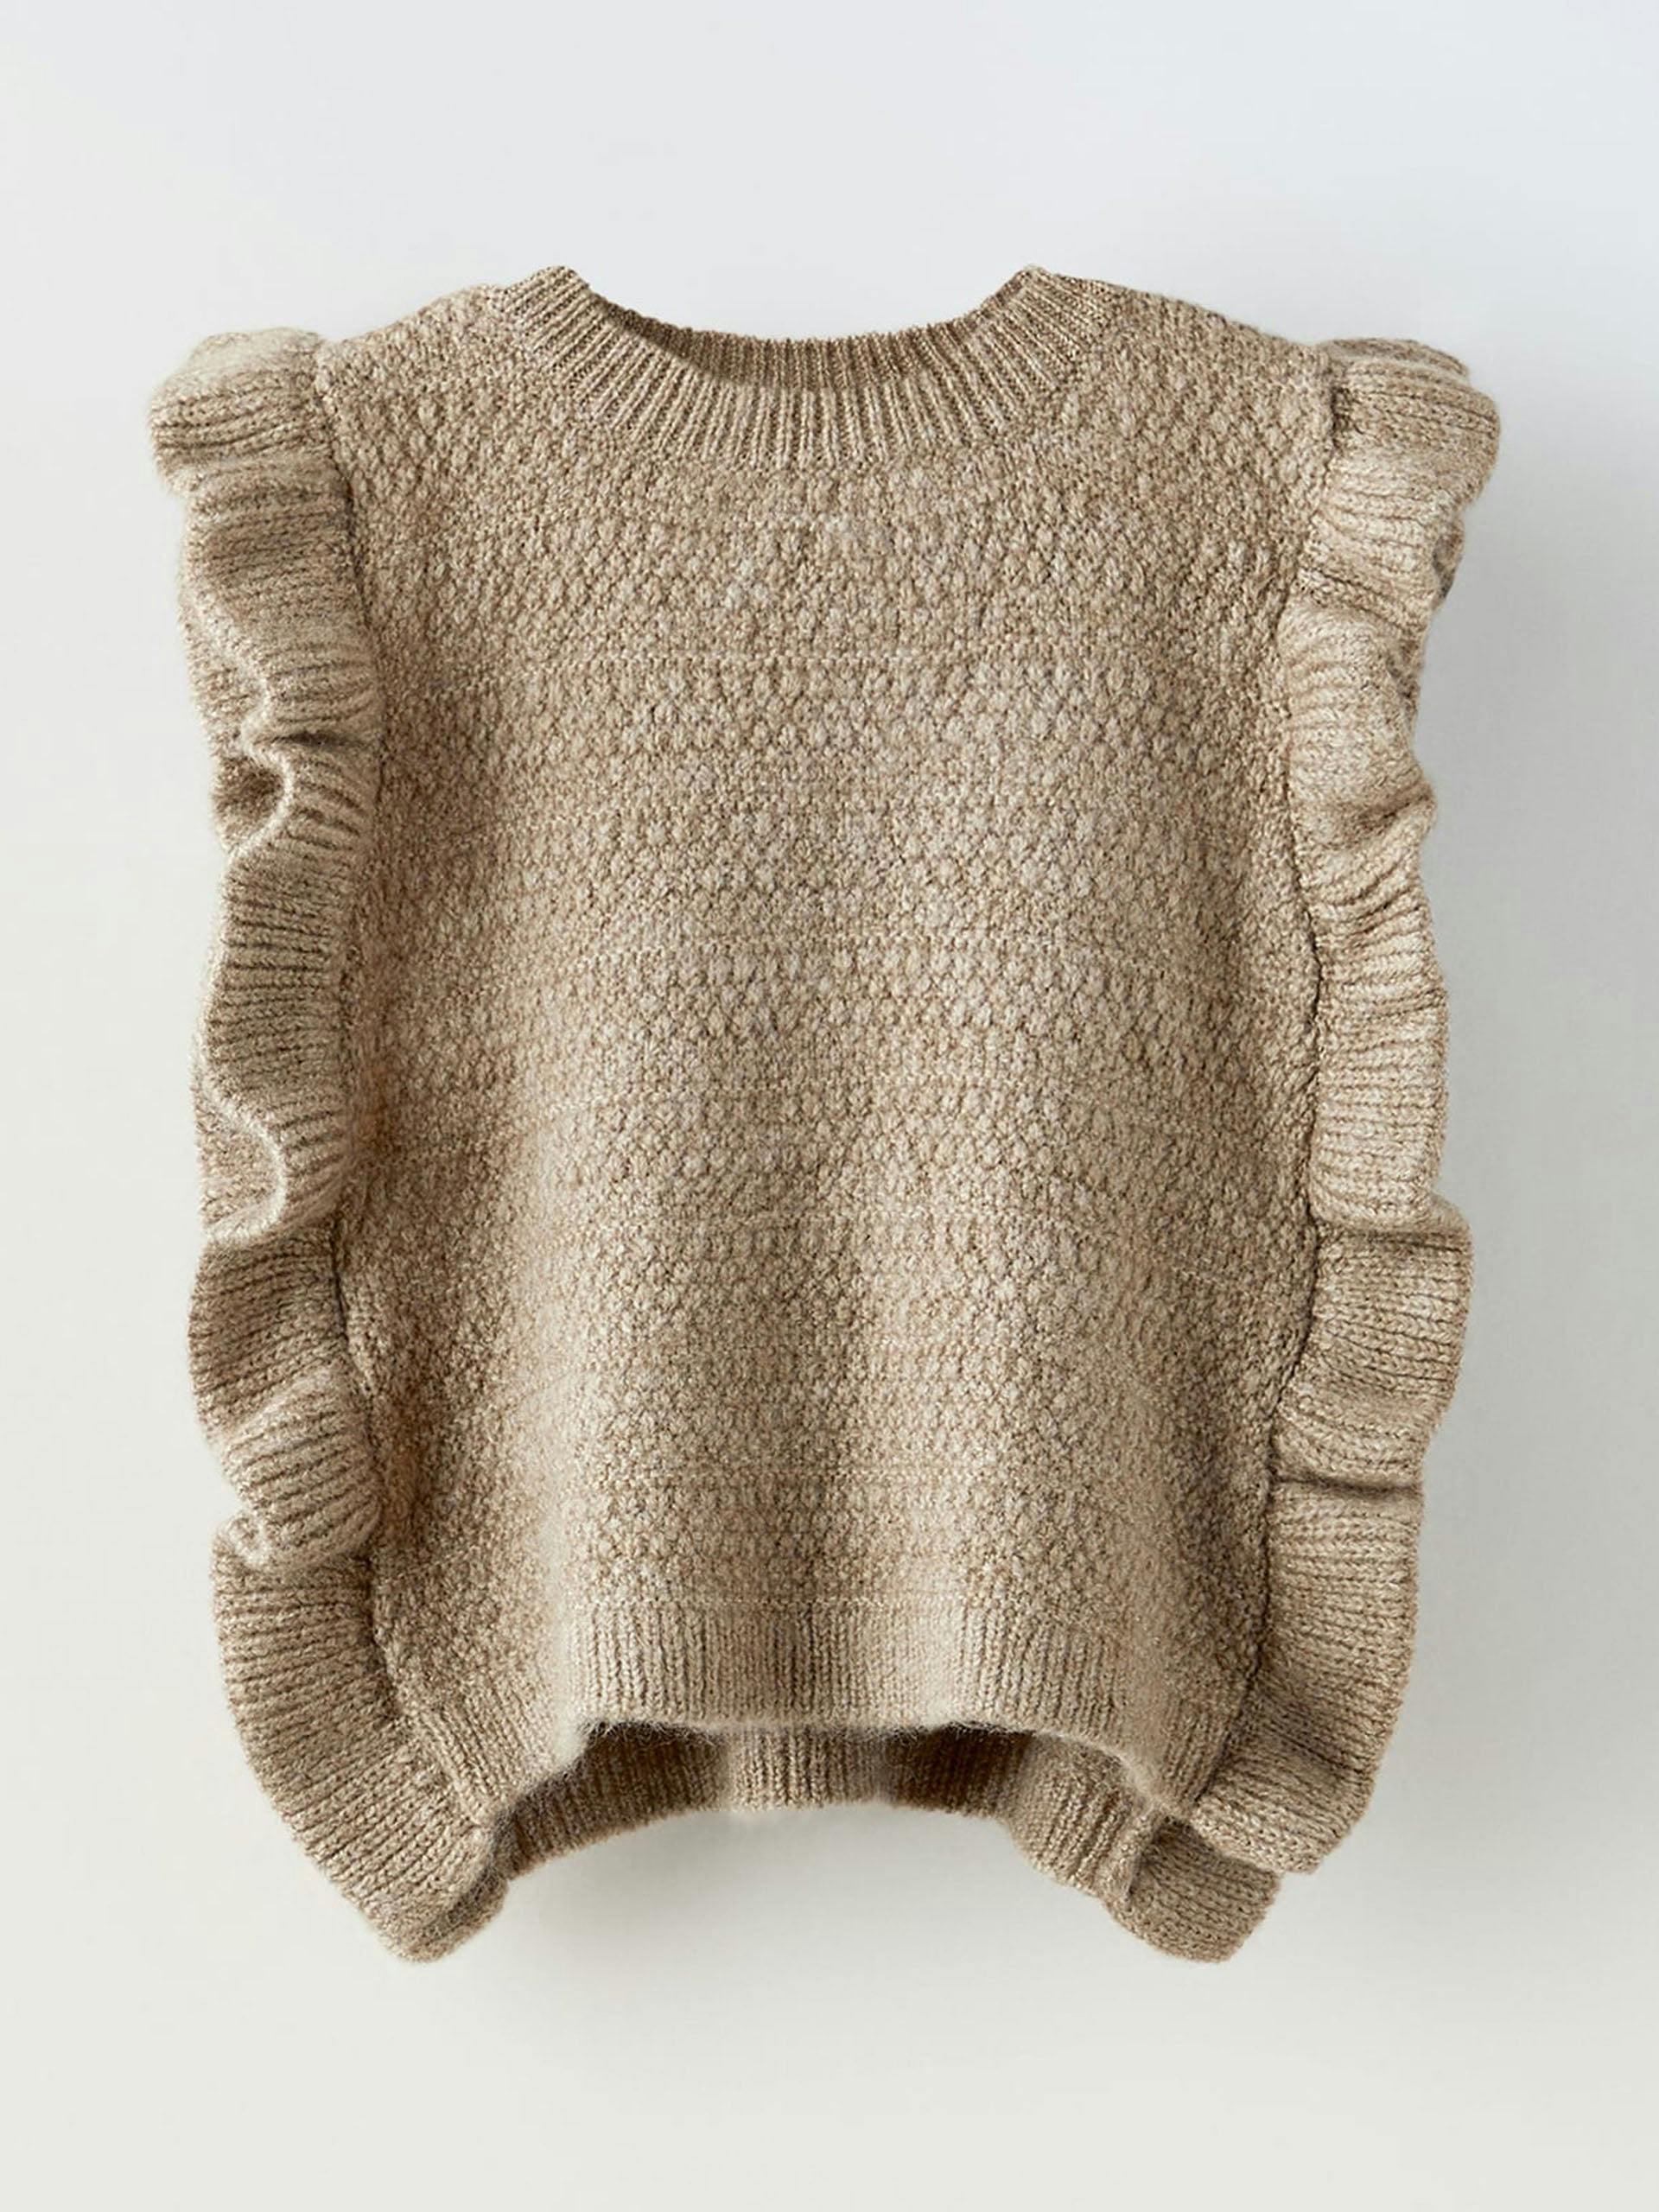 Ruffled knit bib